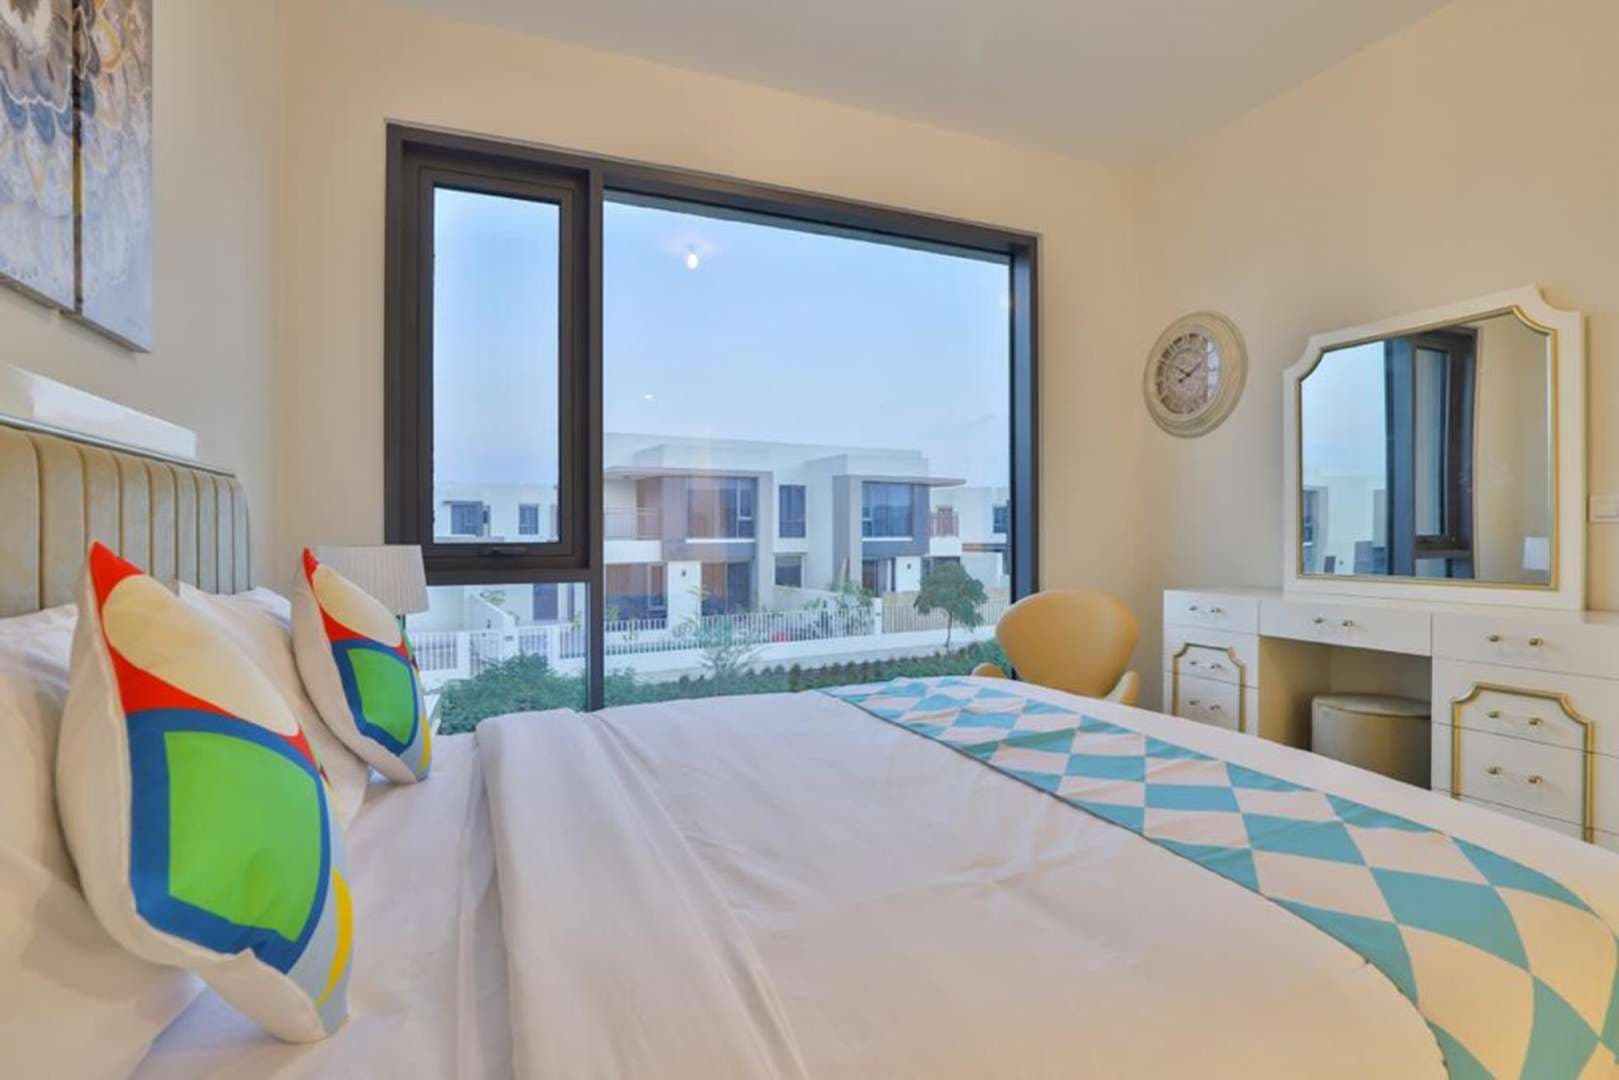 4 Bedroom Townhouse For Sale Maple At Dubai Hills Estate Lp06390 2ac56b3fb1a6bc00.jpg